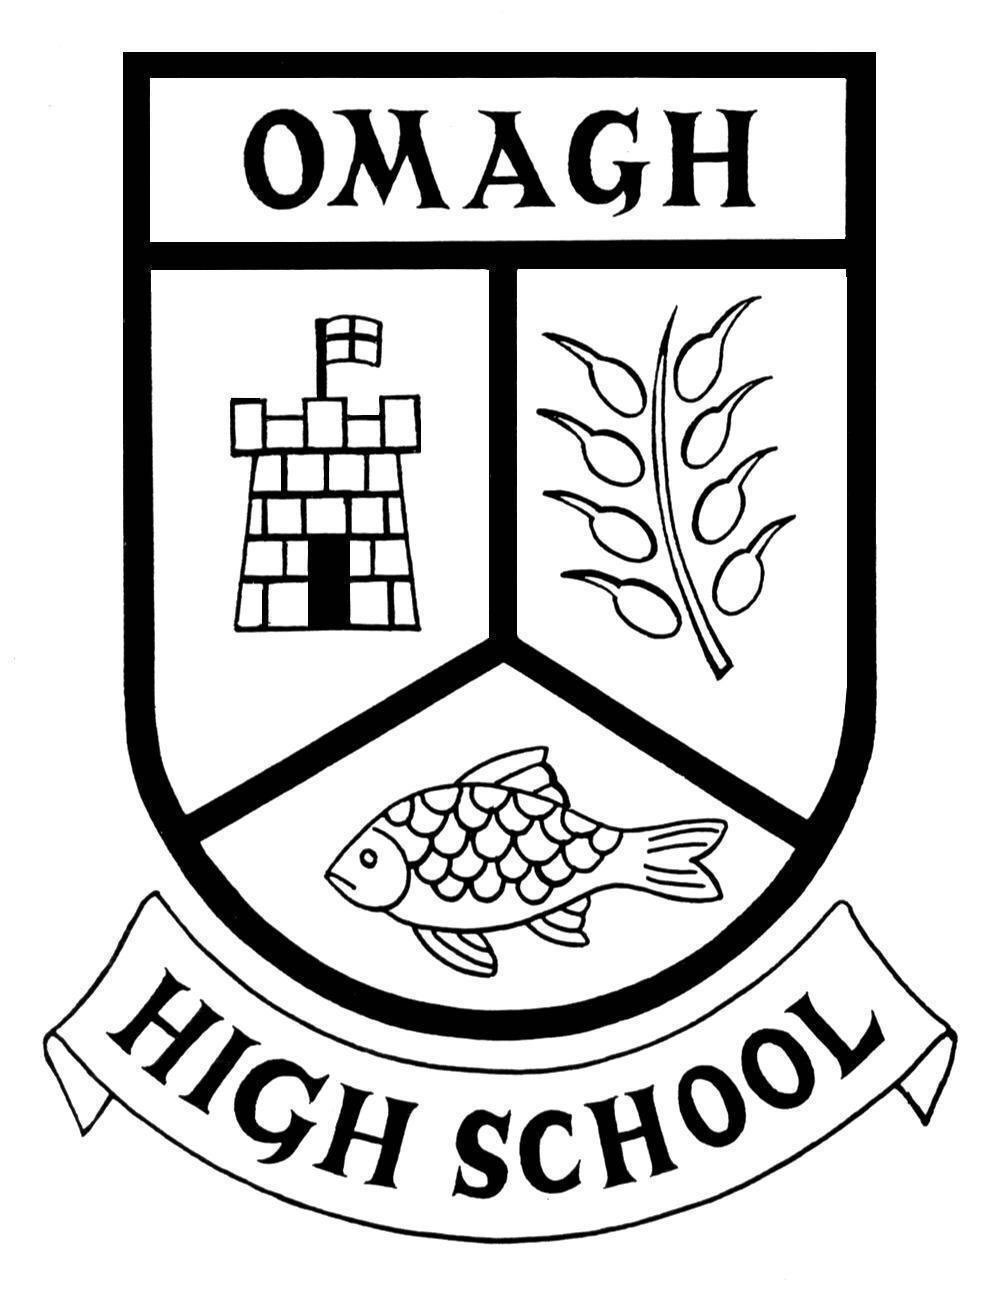 Omagh High School校徽